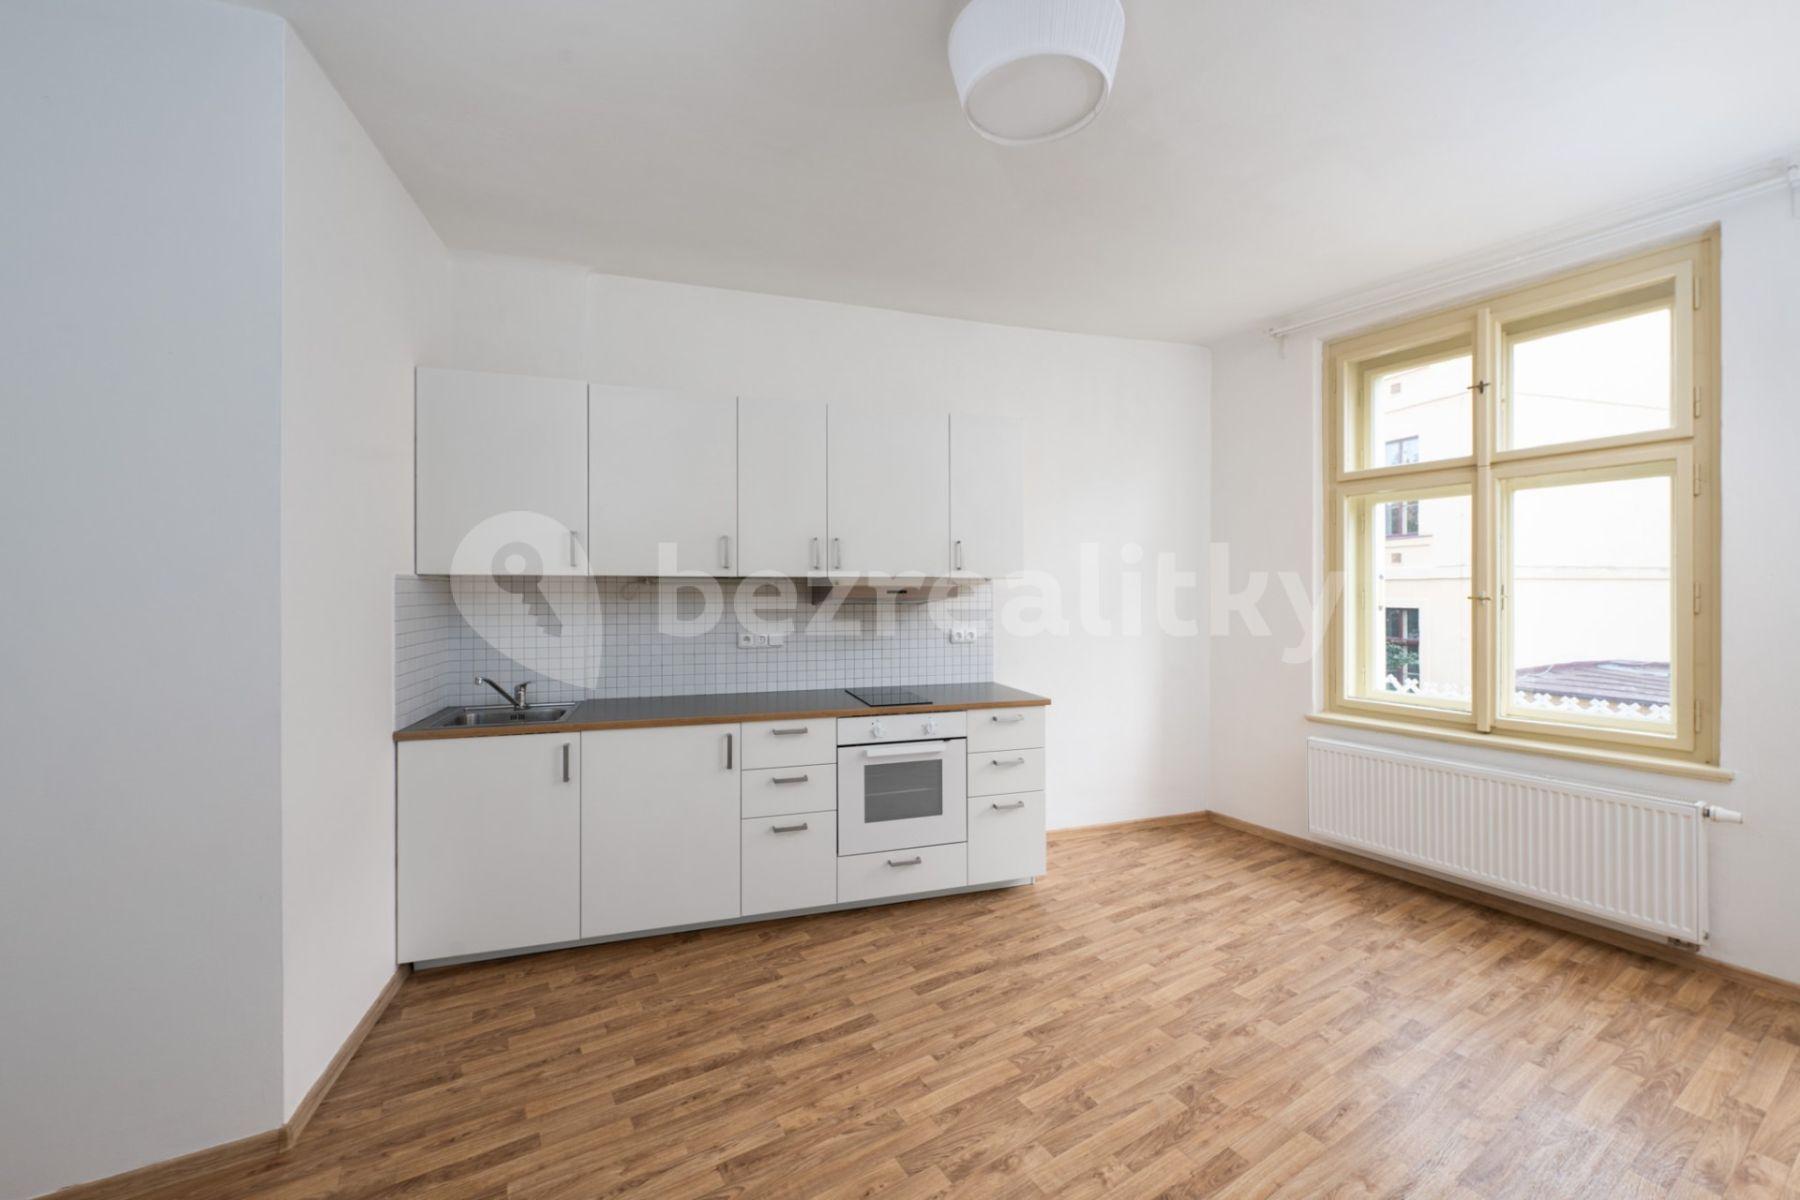 2 bedroom with open-plan kitchen flat for sale, 94 m², Neklanova, Prague, Prague